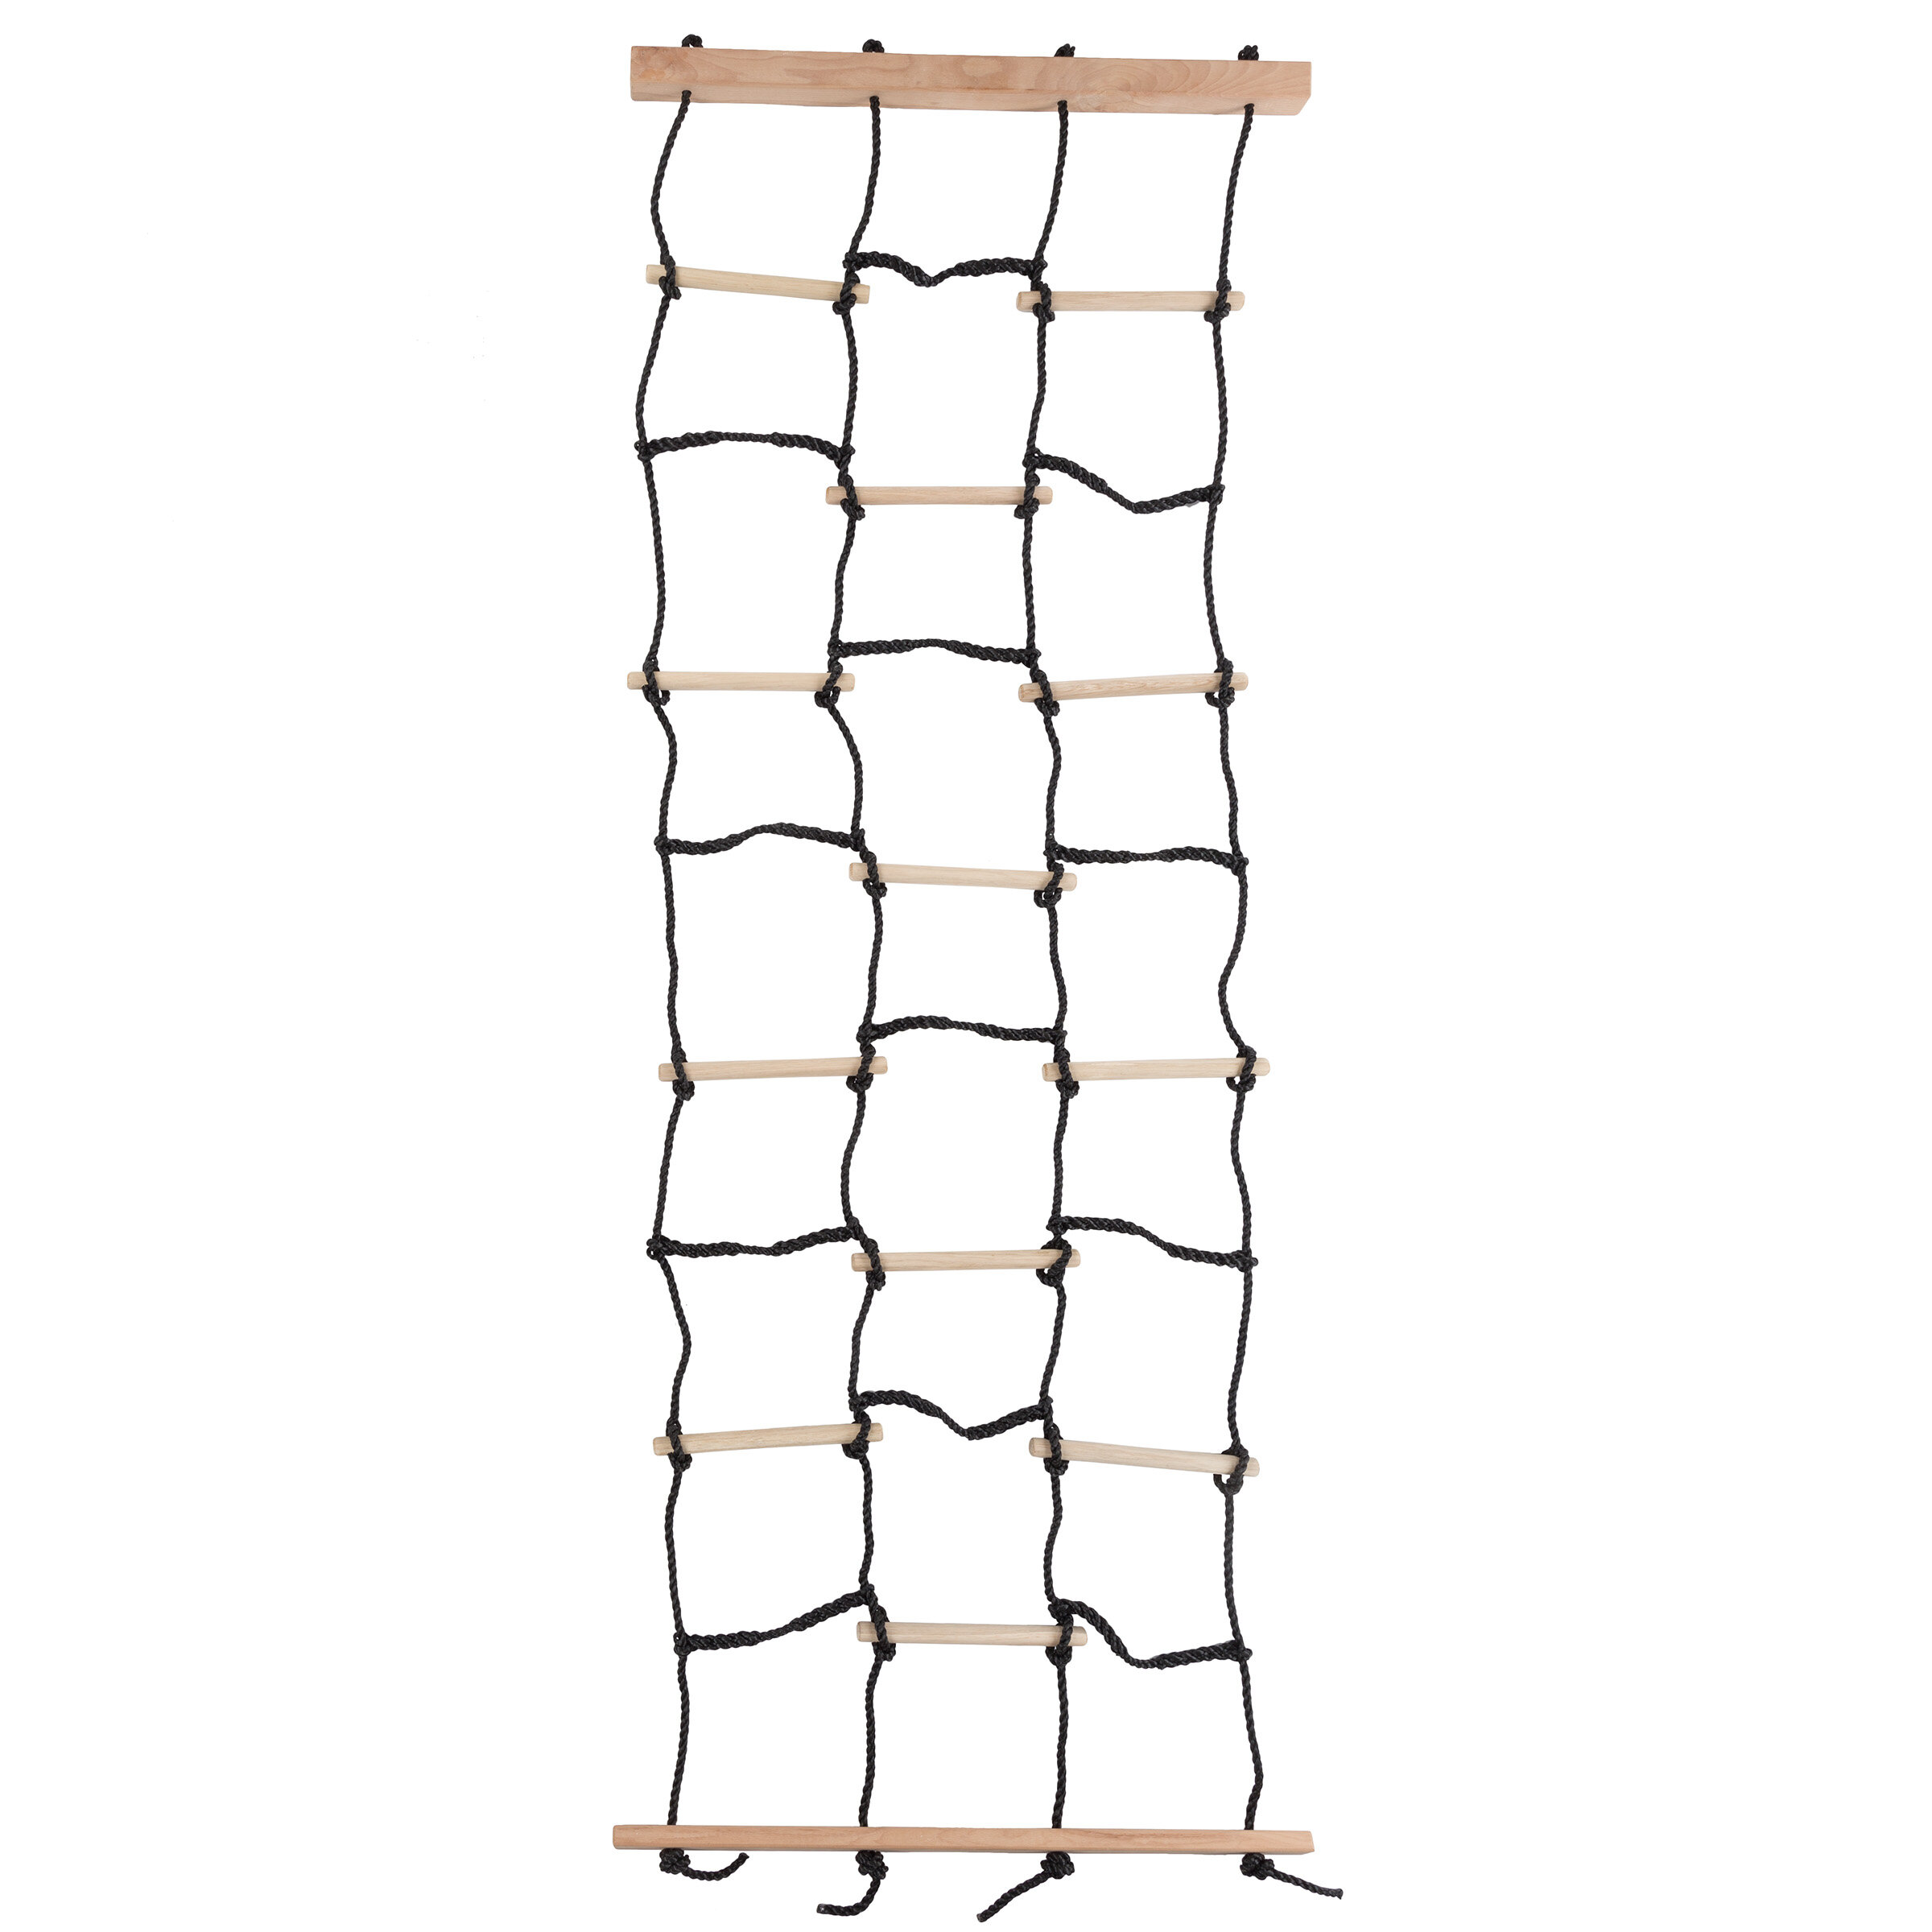 SM SunniMix Climbing Cargo Net Rope Ladder for Kids Children Playing Backyard Game Tool 120cm x 200cm 